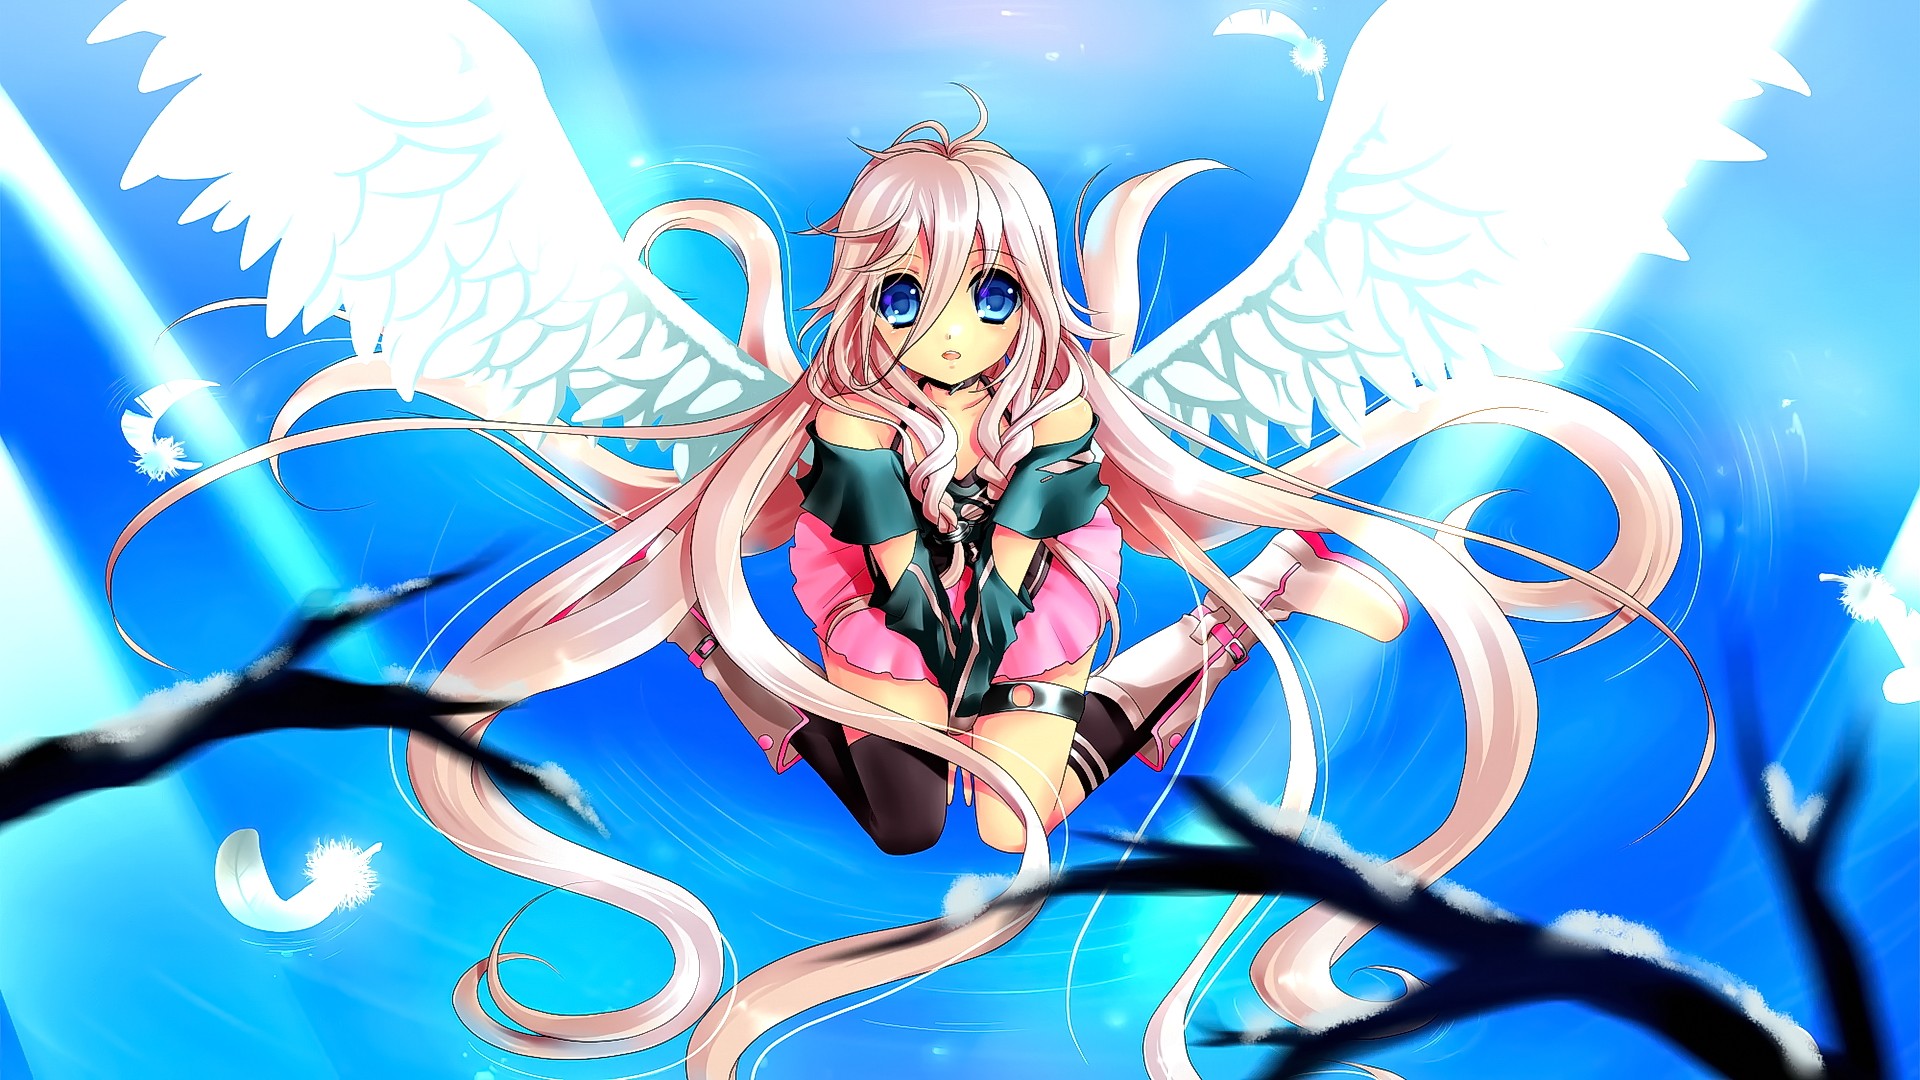 Anime 1920x1080 anime anime girls Vocaloid IA (Vocaloid) wings fantasy art fantasy girl pink hair long hair blue eyes